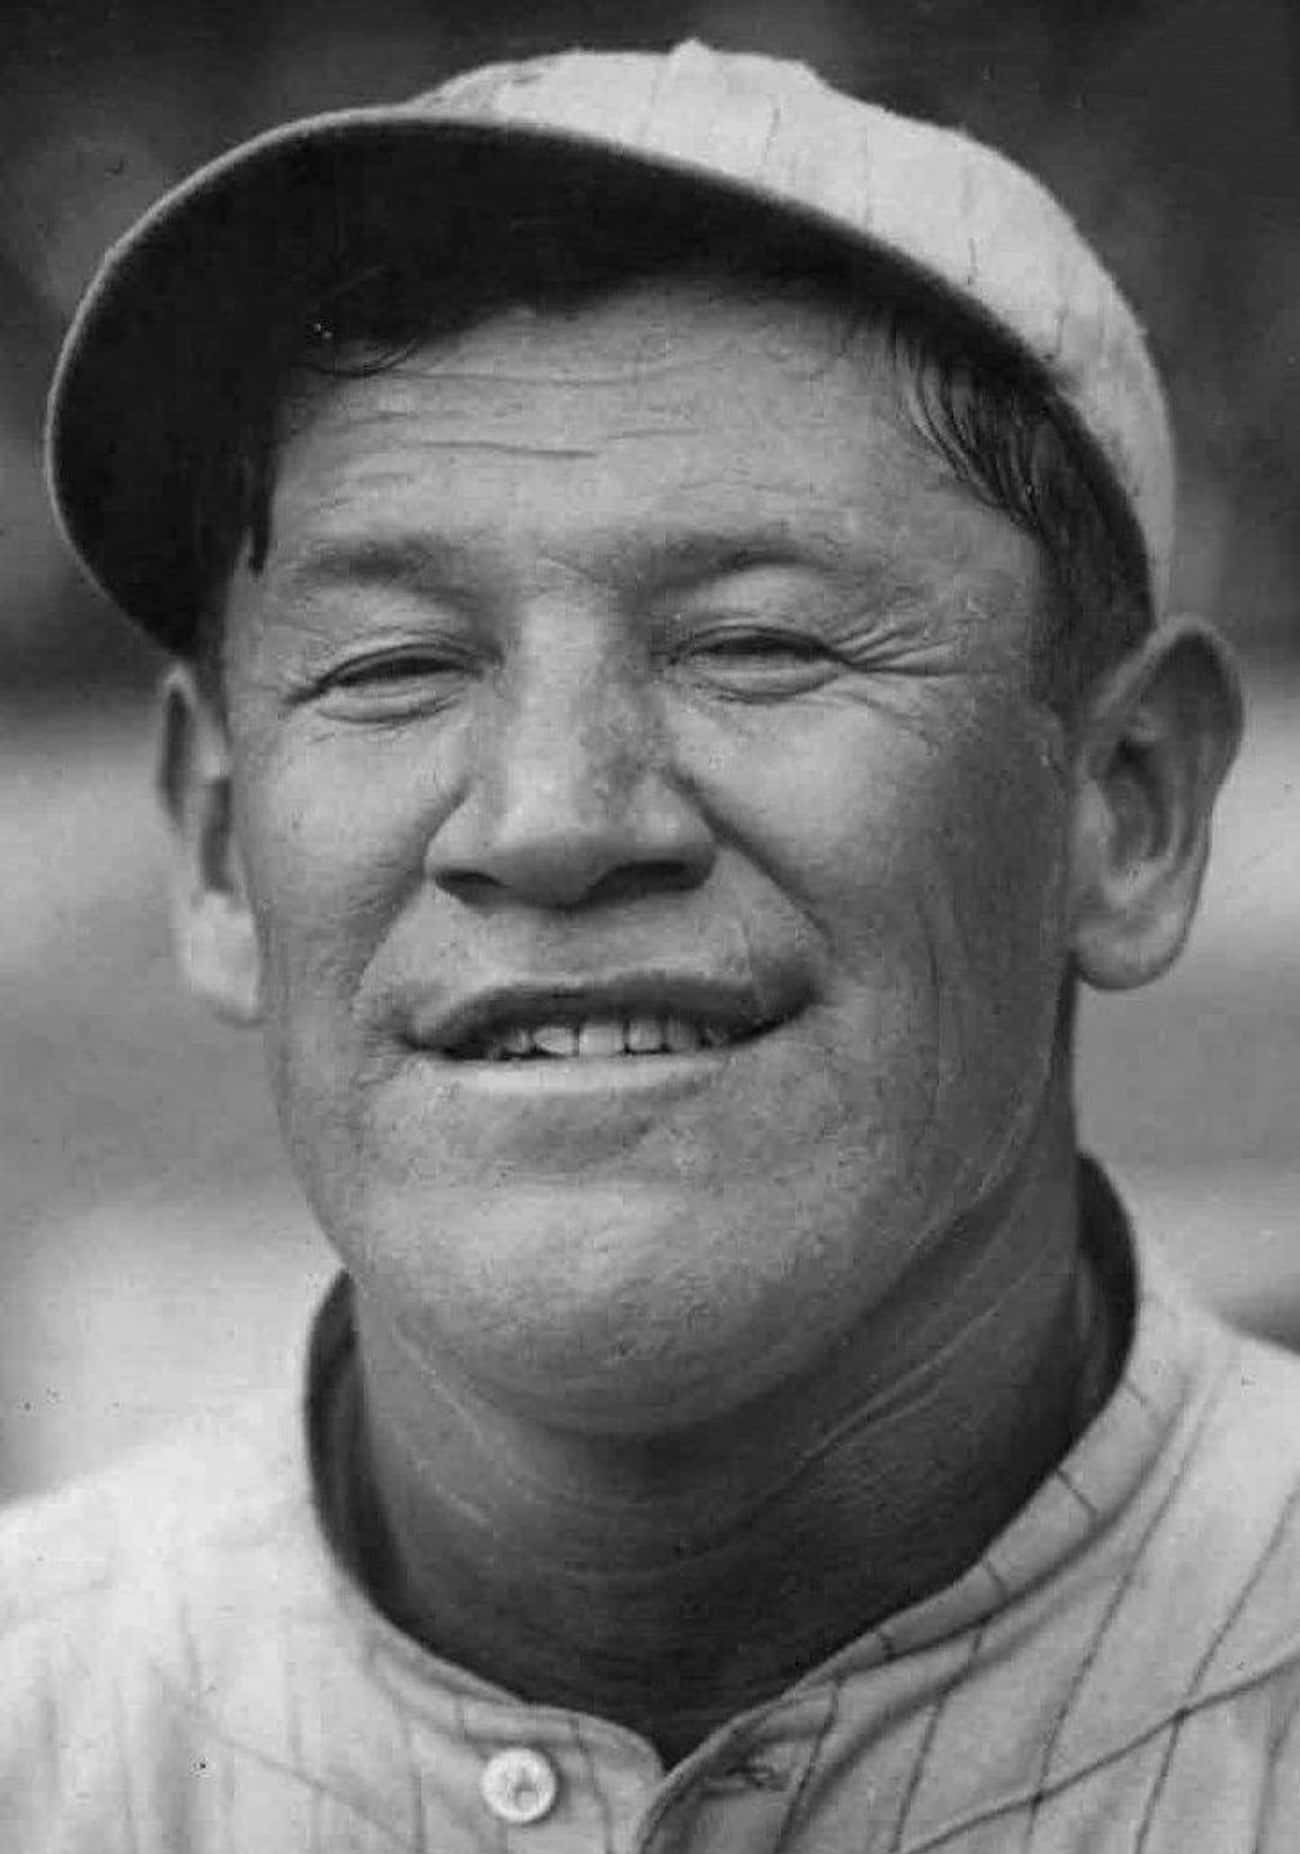 Thorpe Played Professional Baseball For Six Seasons